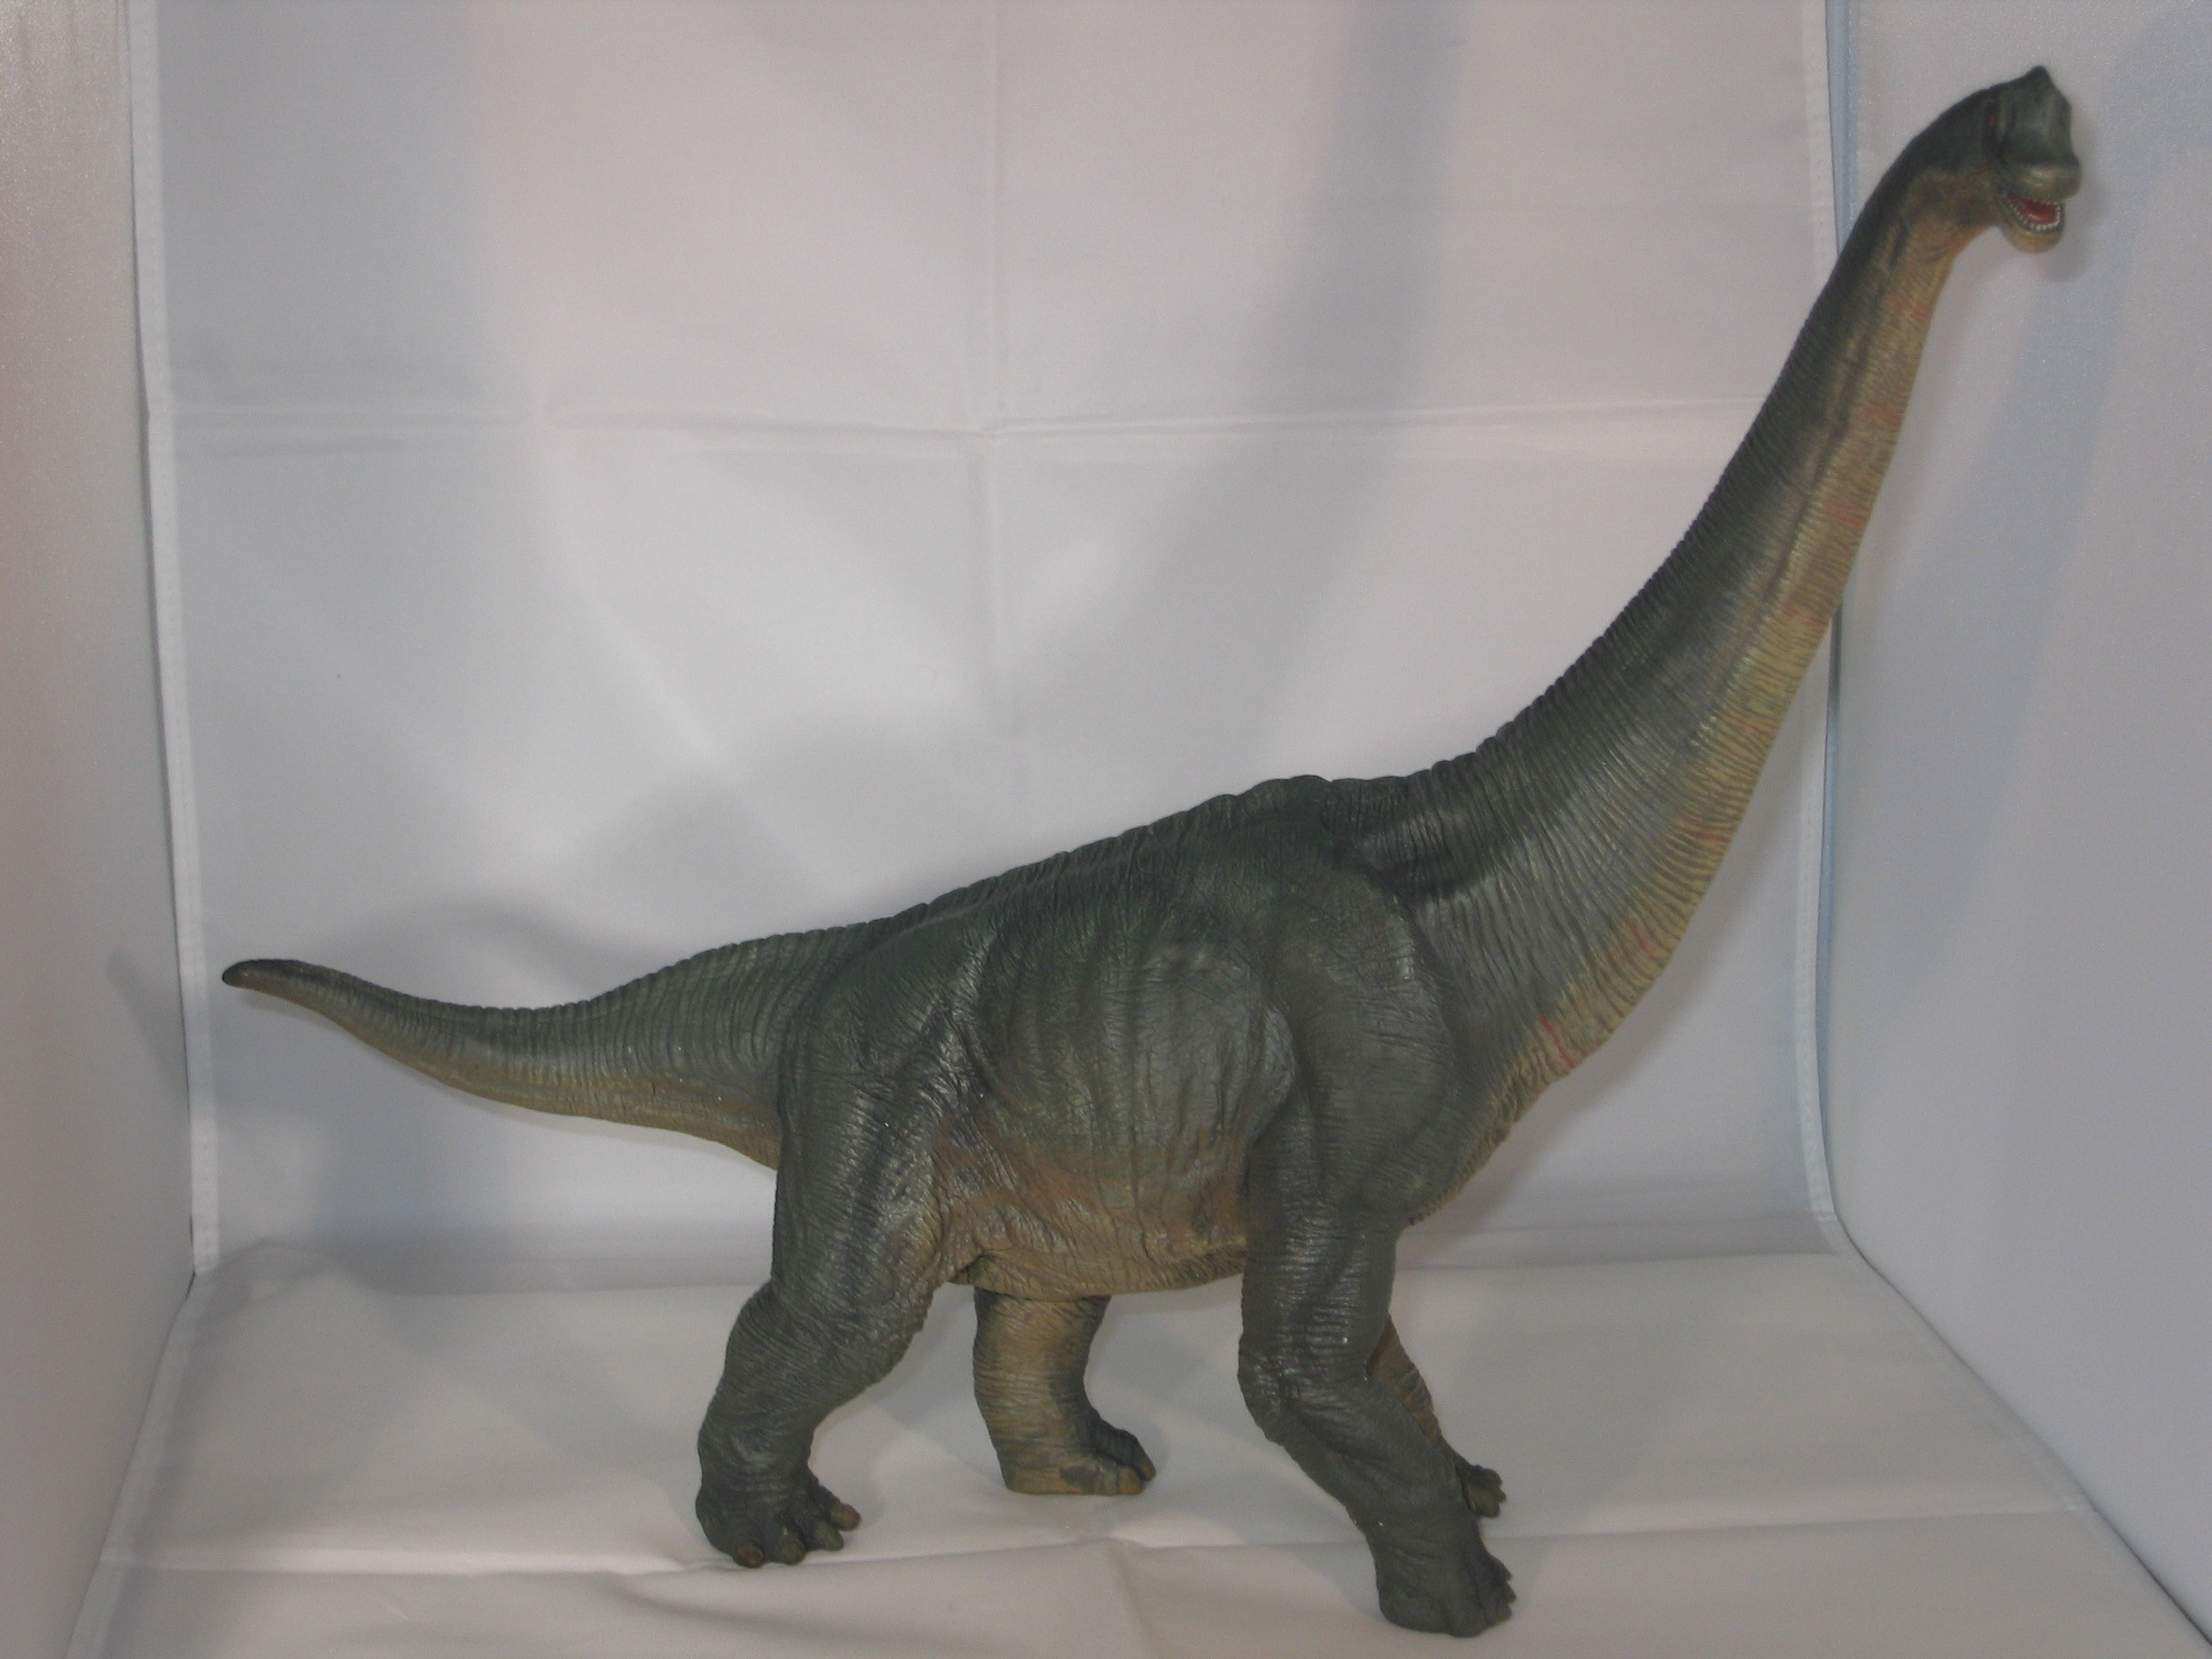 Papo Brachiosaurus dinosaur model. Exploring the laws of Darwinism.